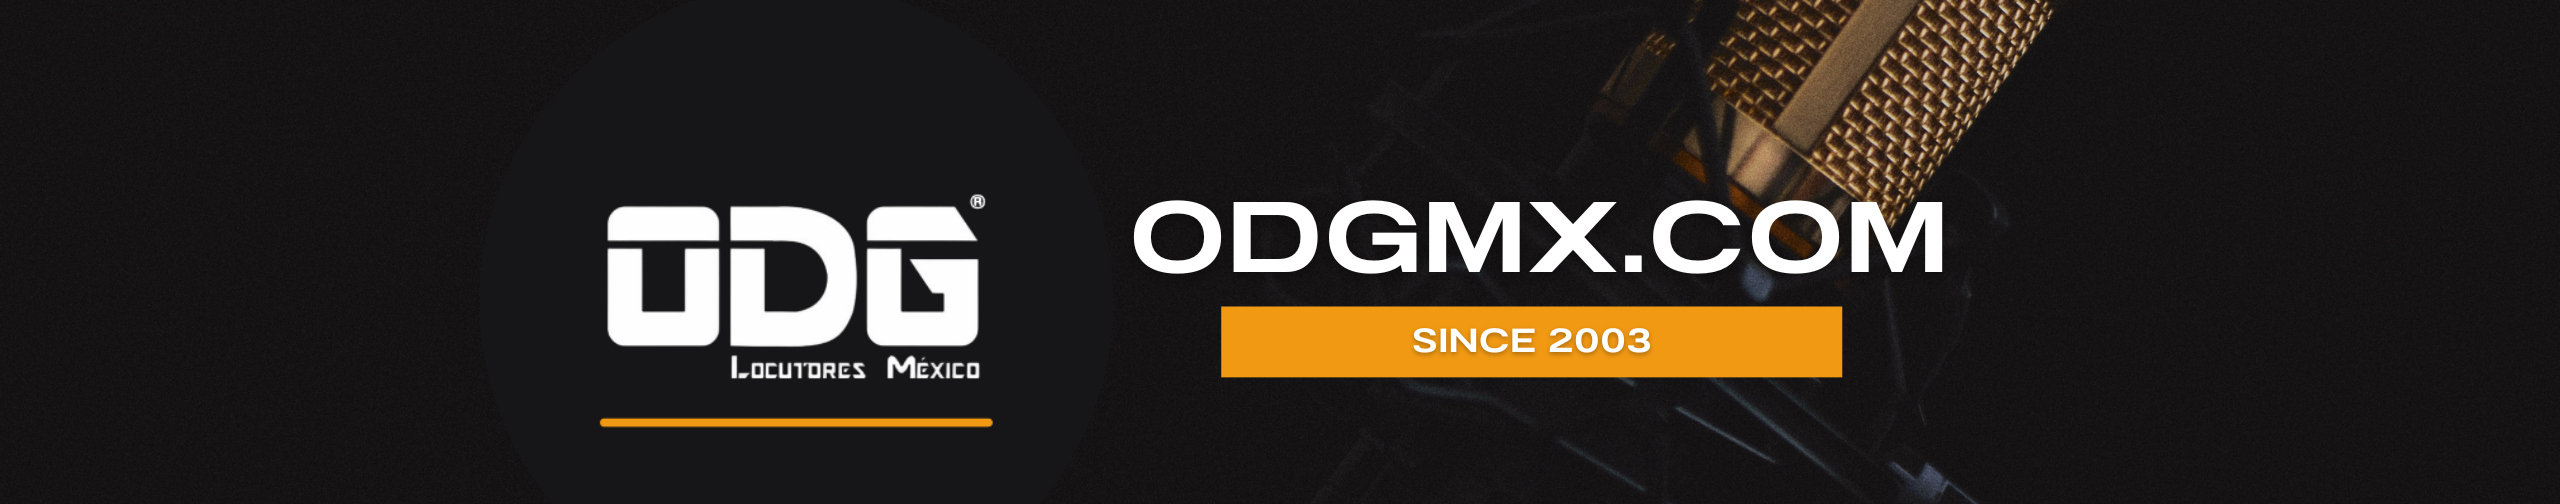 ODG Mx's profile banner